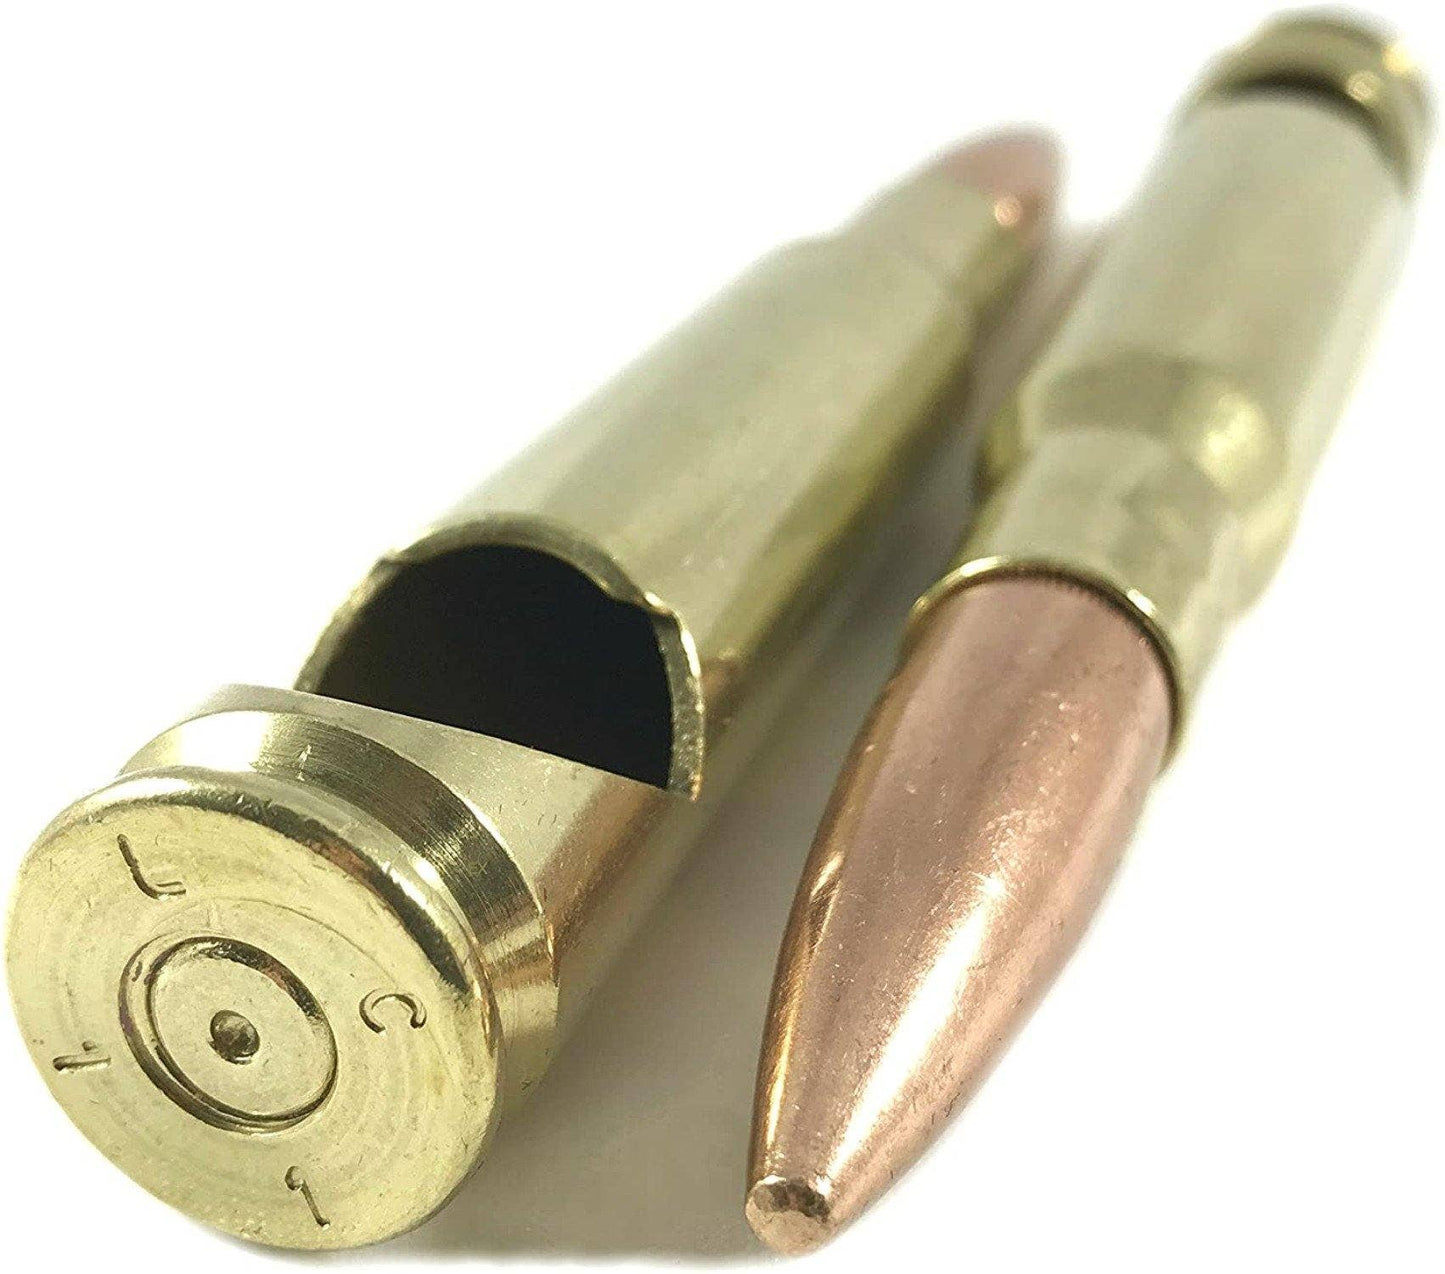 50 Caliber BMG Real Bullet Bottle Opener